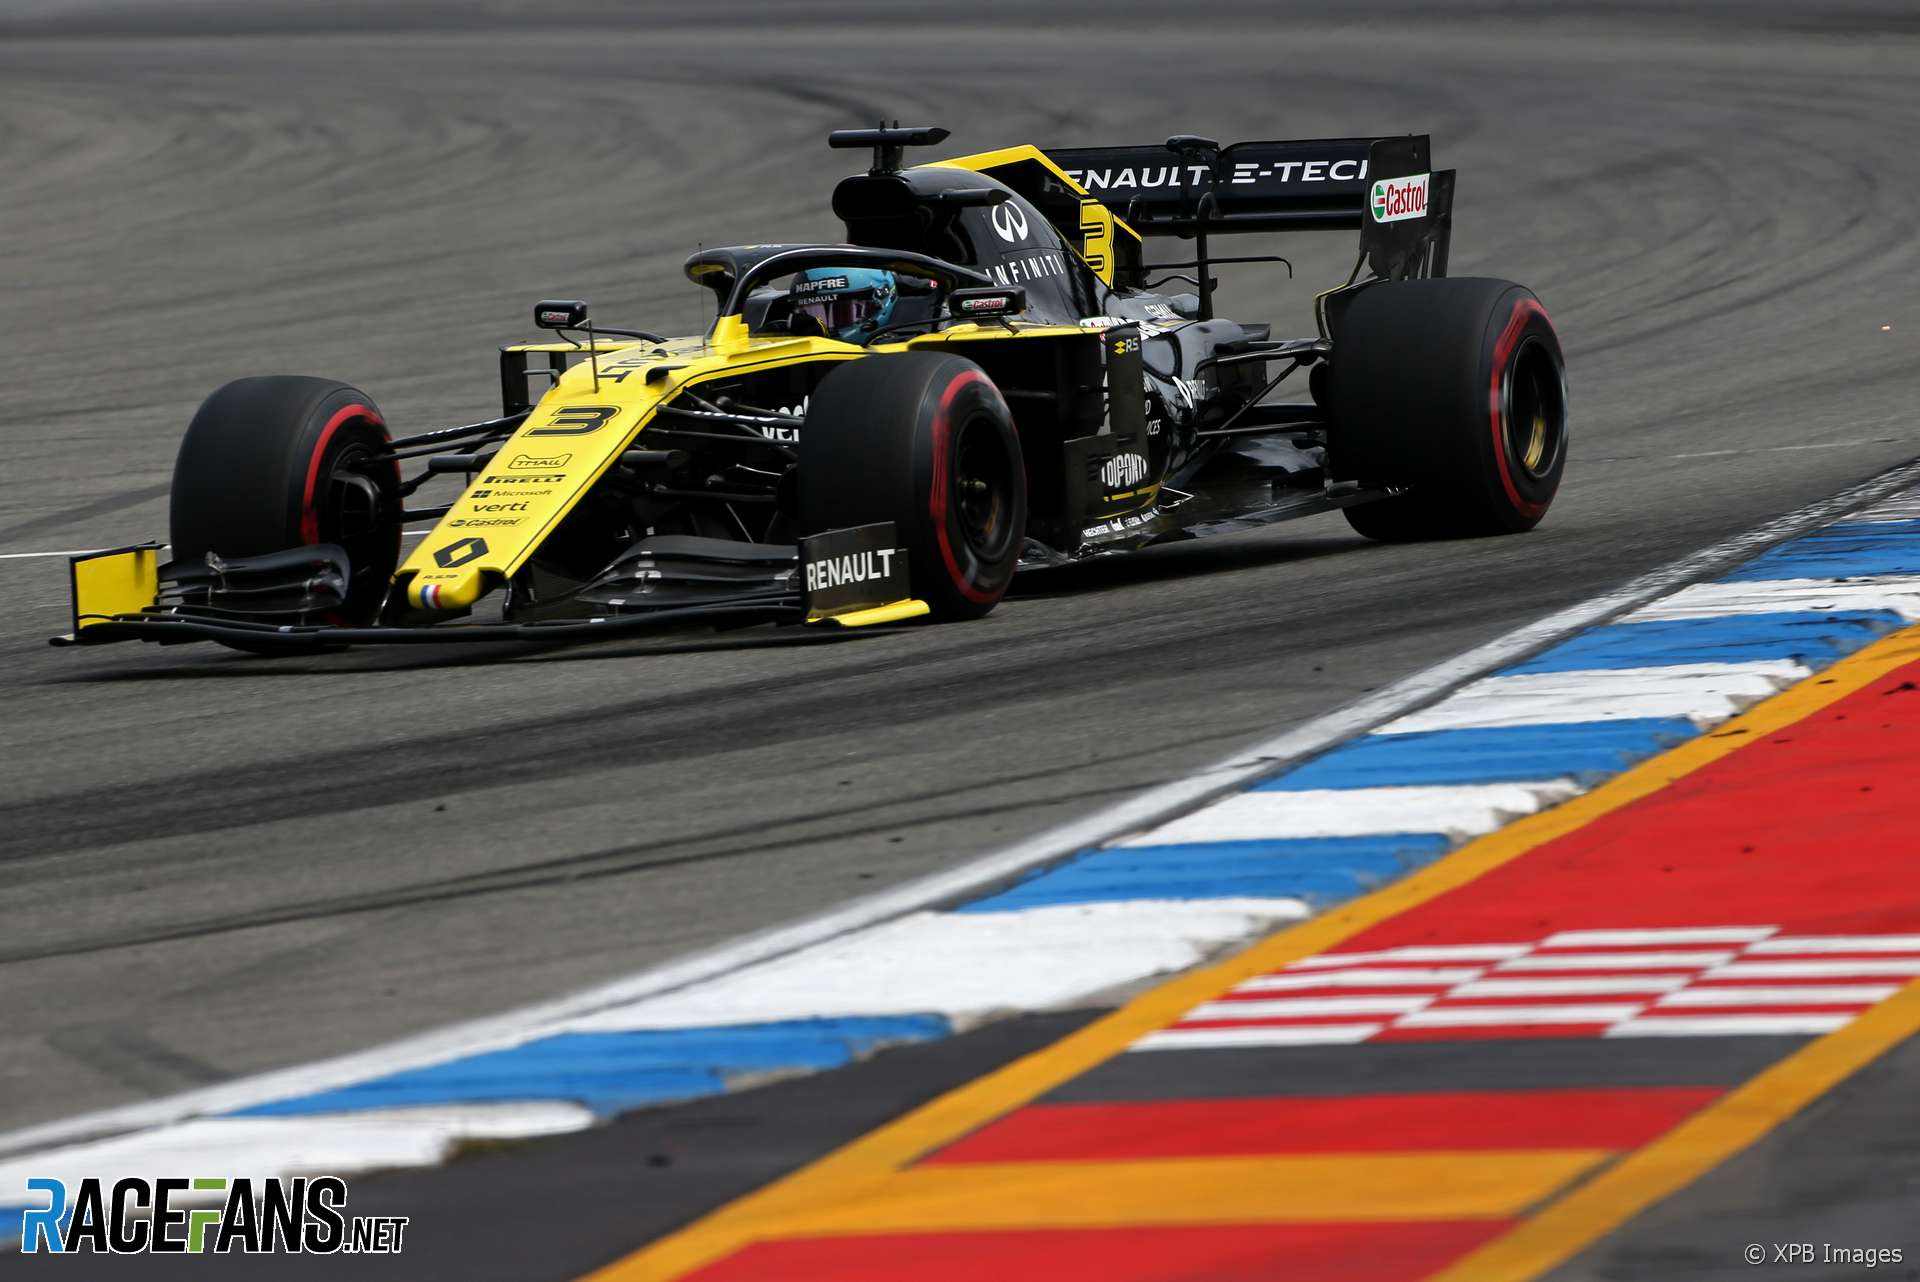 Daniel Ricciardo, Renault, Hockenheimring, 2019